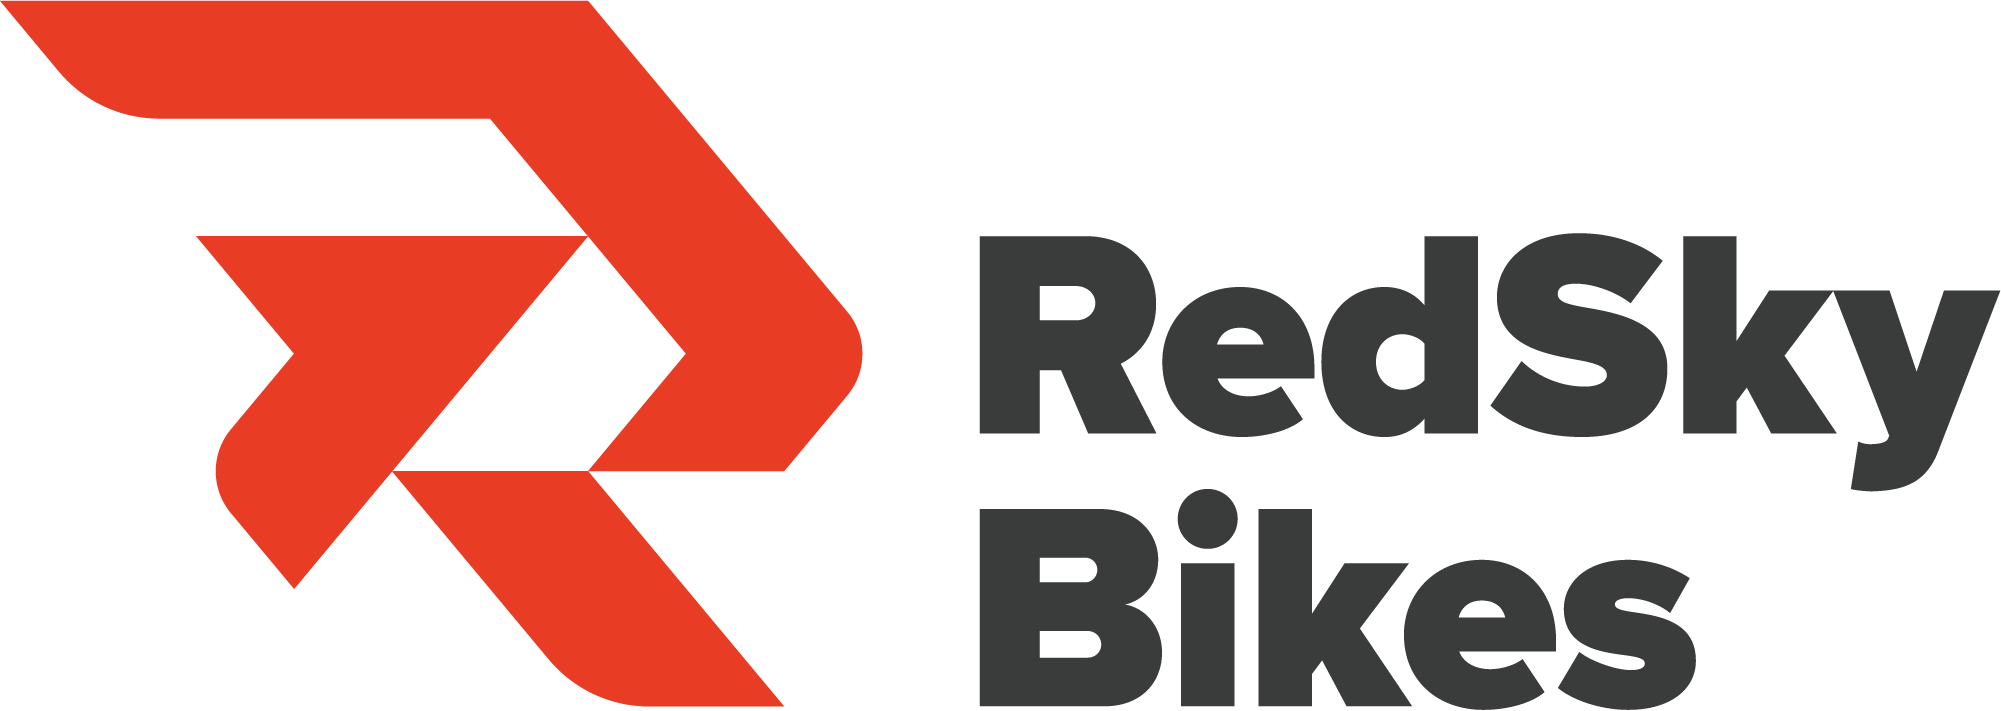 RedSky Bikes logo